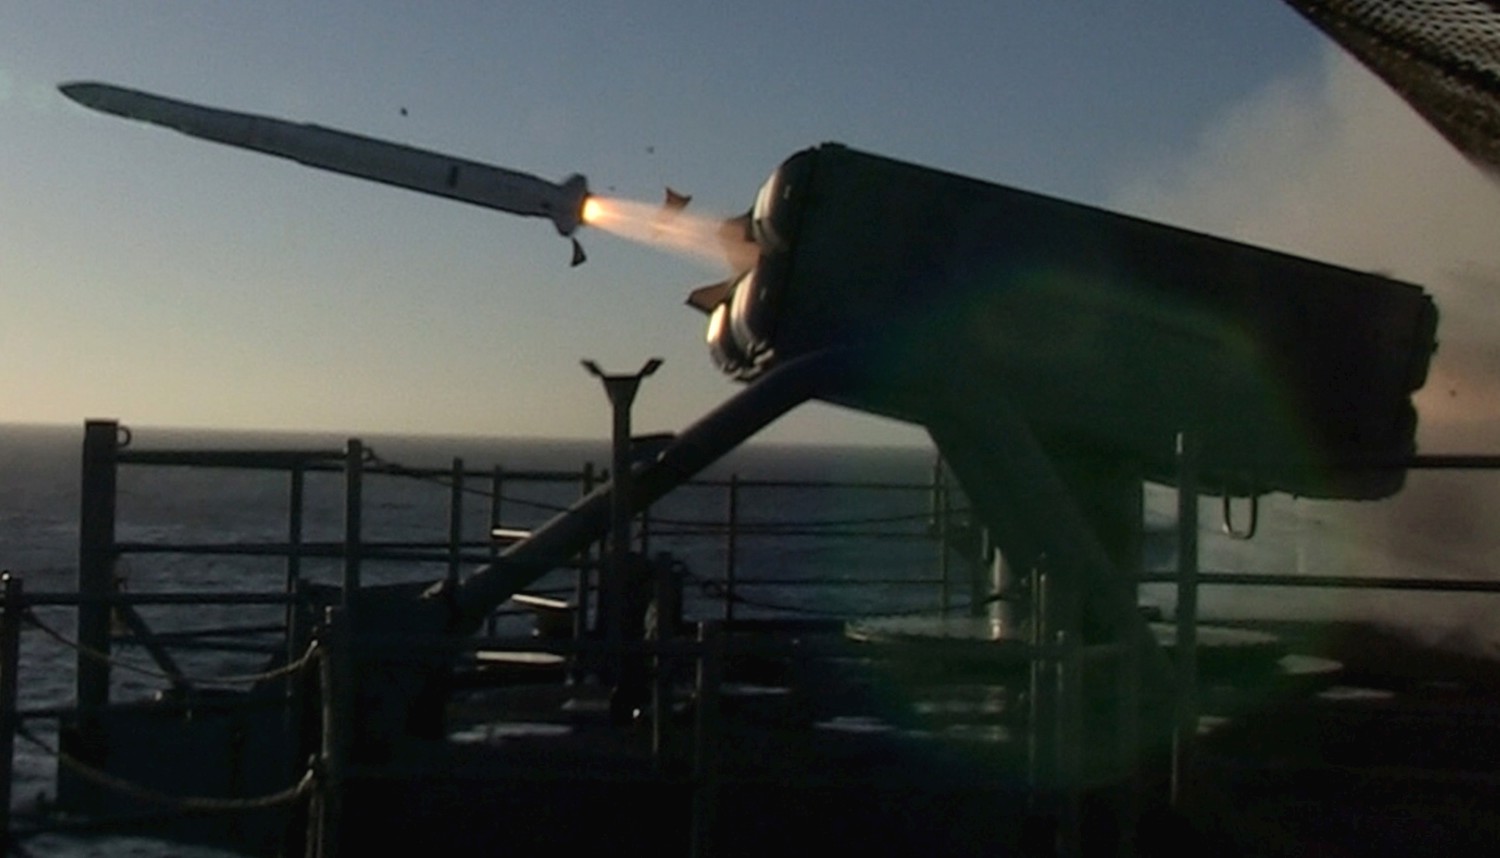 rim-162 evolved sea sparrow missile essm sam navy 39